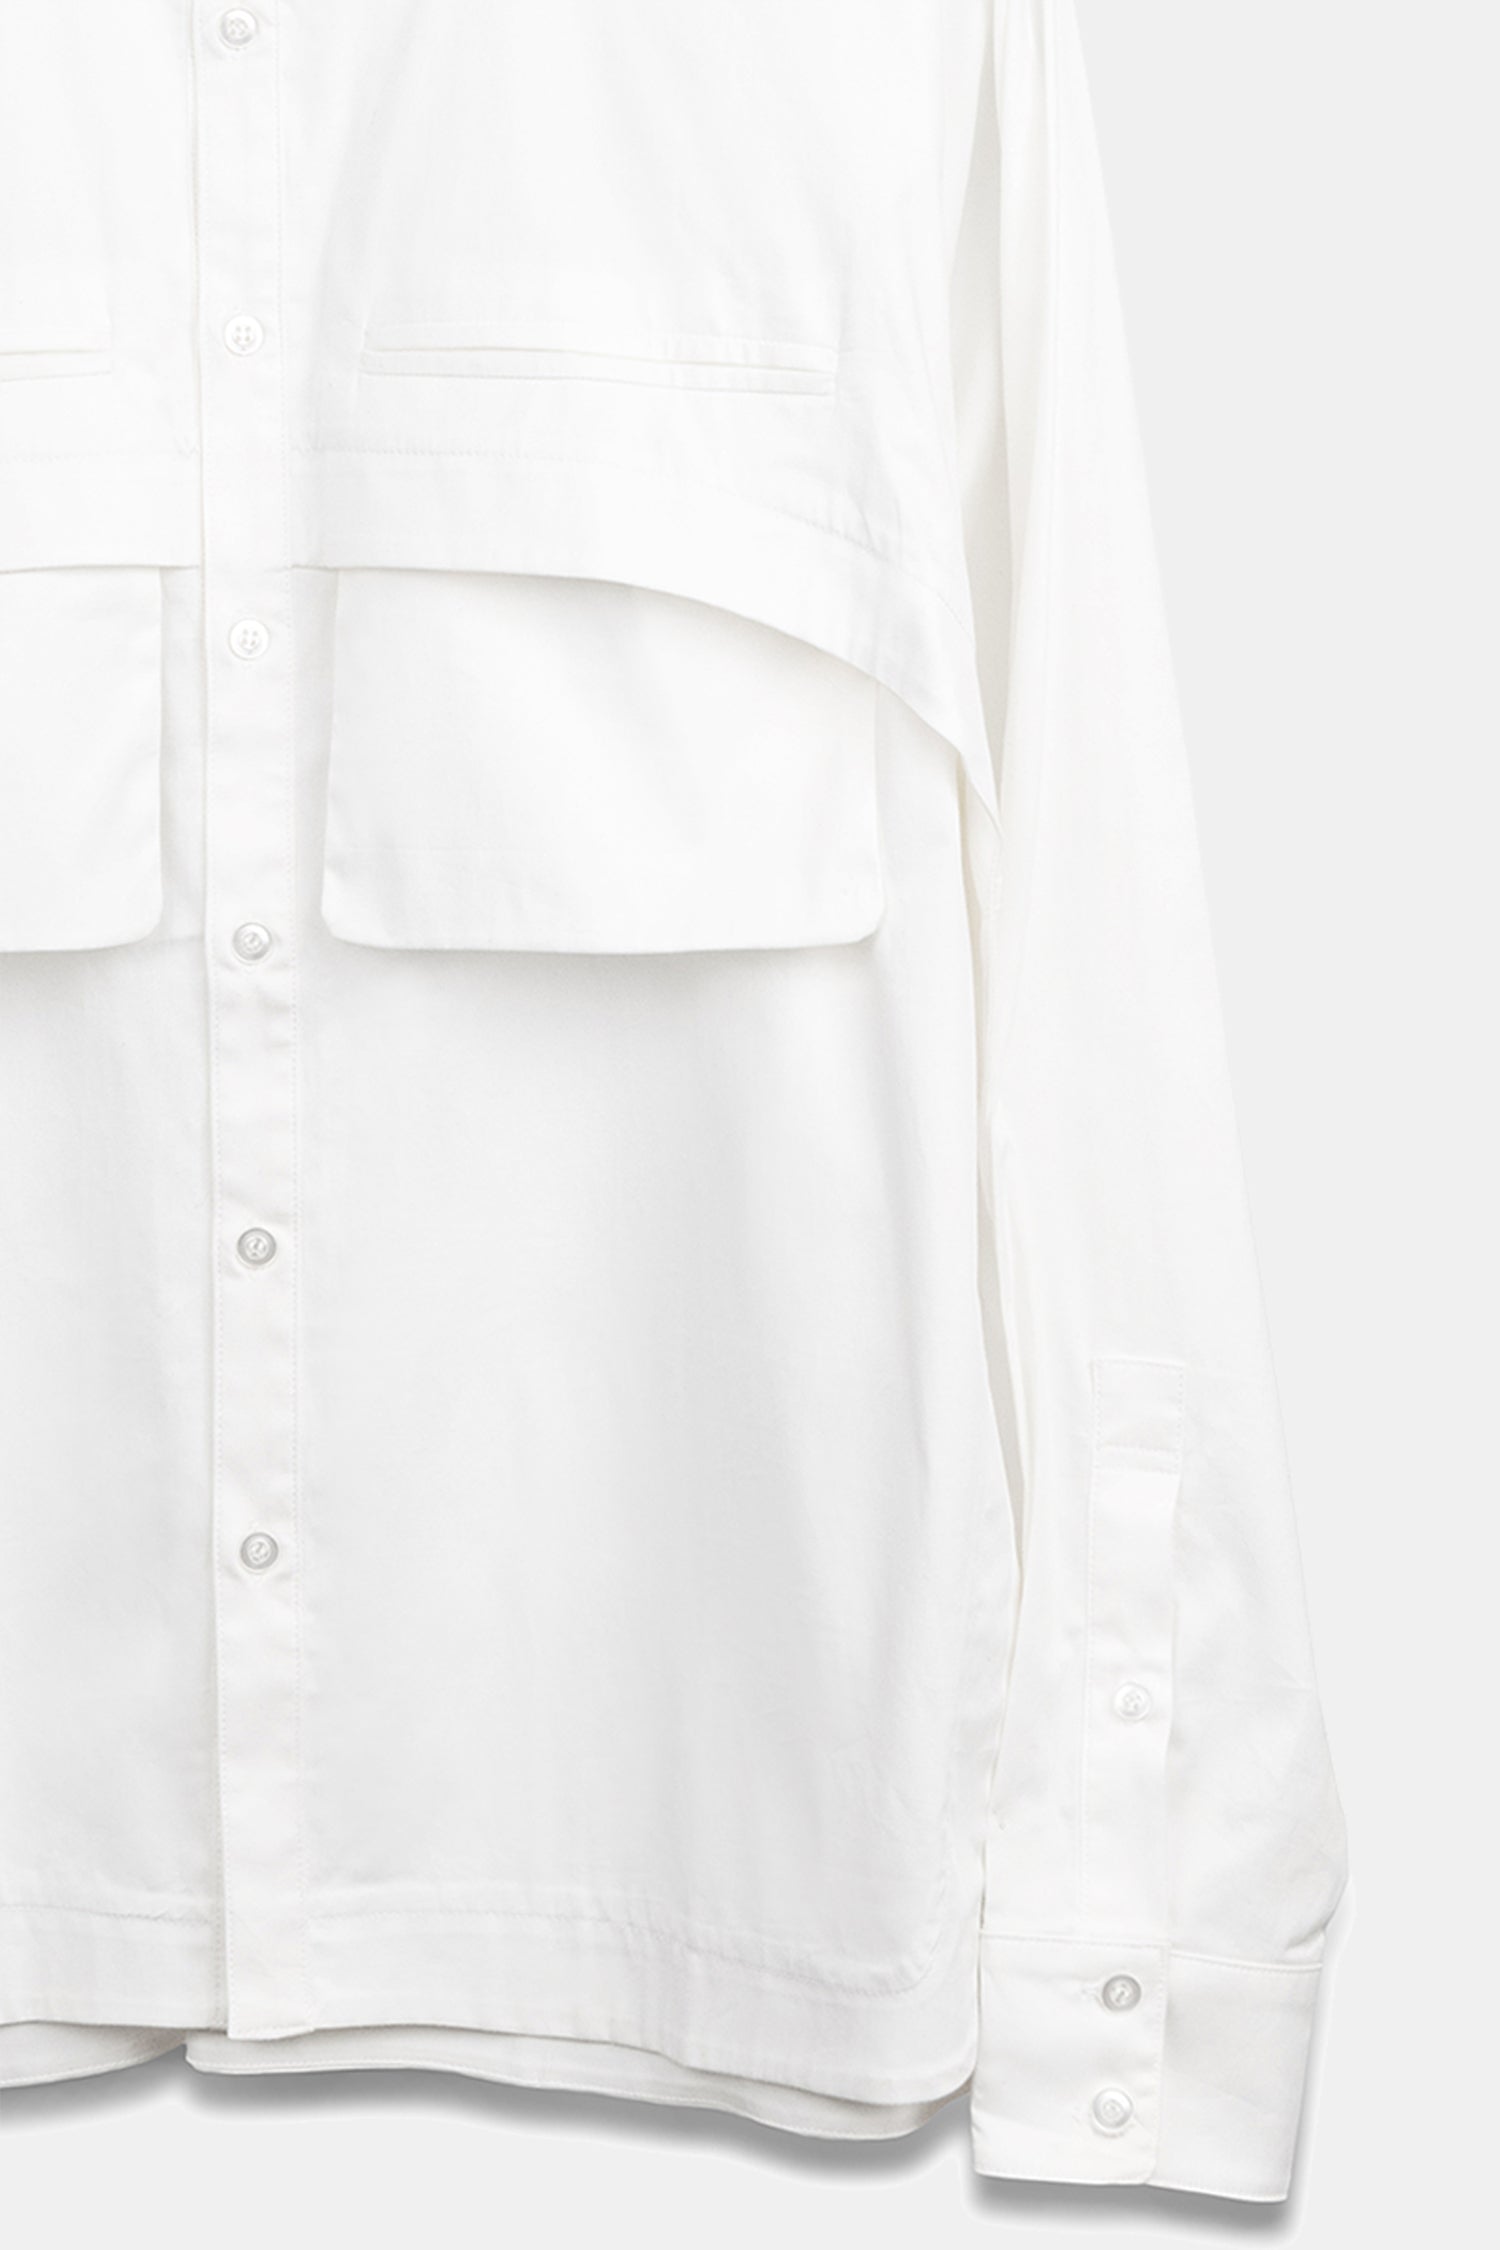 SEANNUNG - MEN - Double-Pocket Shirt 雙口袋短版襯衫  